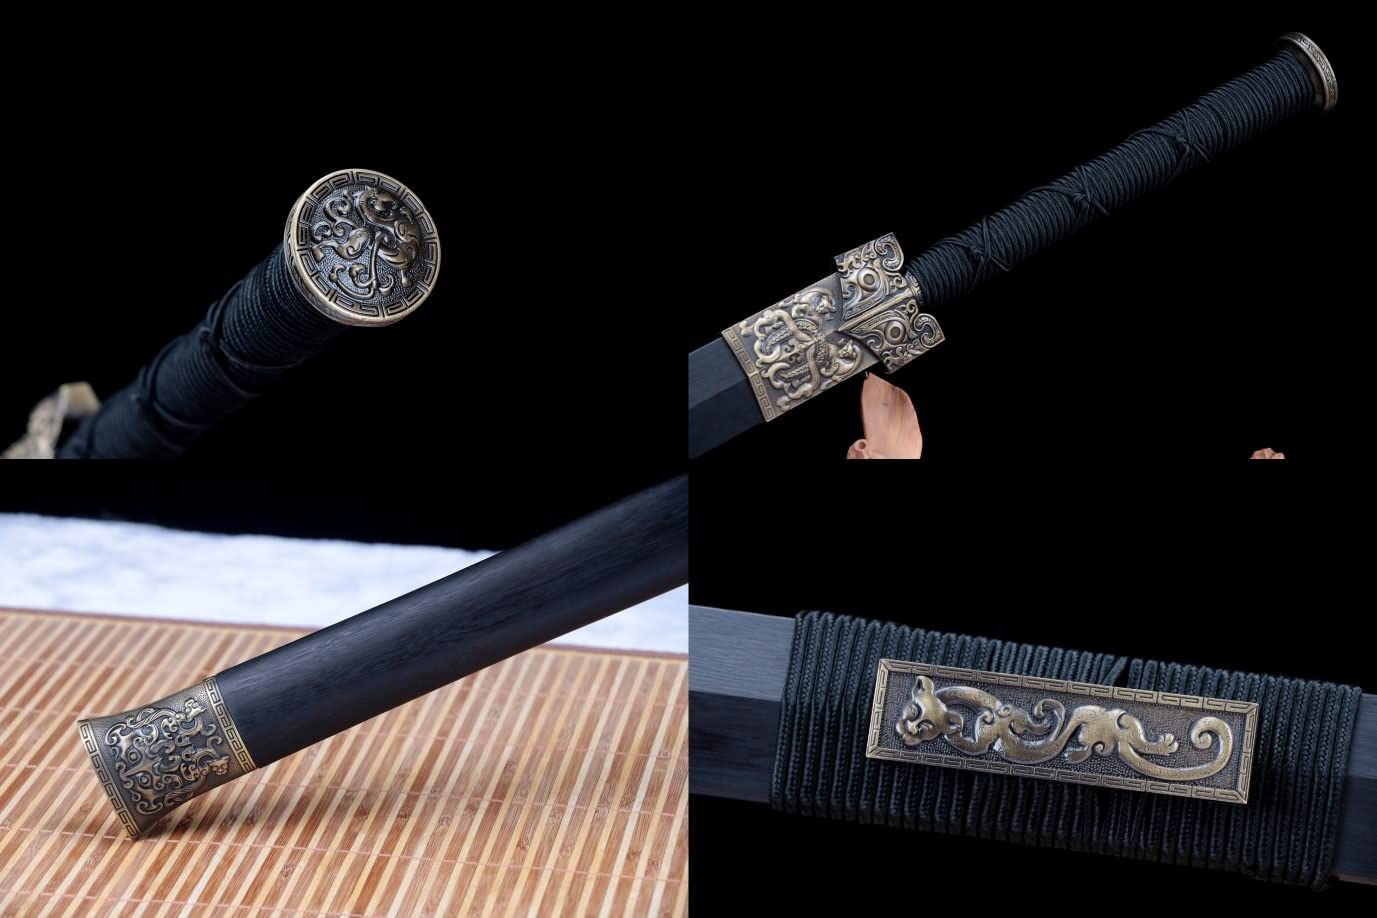 Han jian swords Real,Spring Steel Blade,Alloy Fittings,Black Wood Scabbard,chinese sword